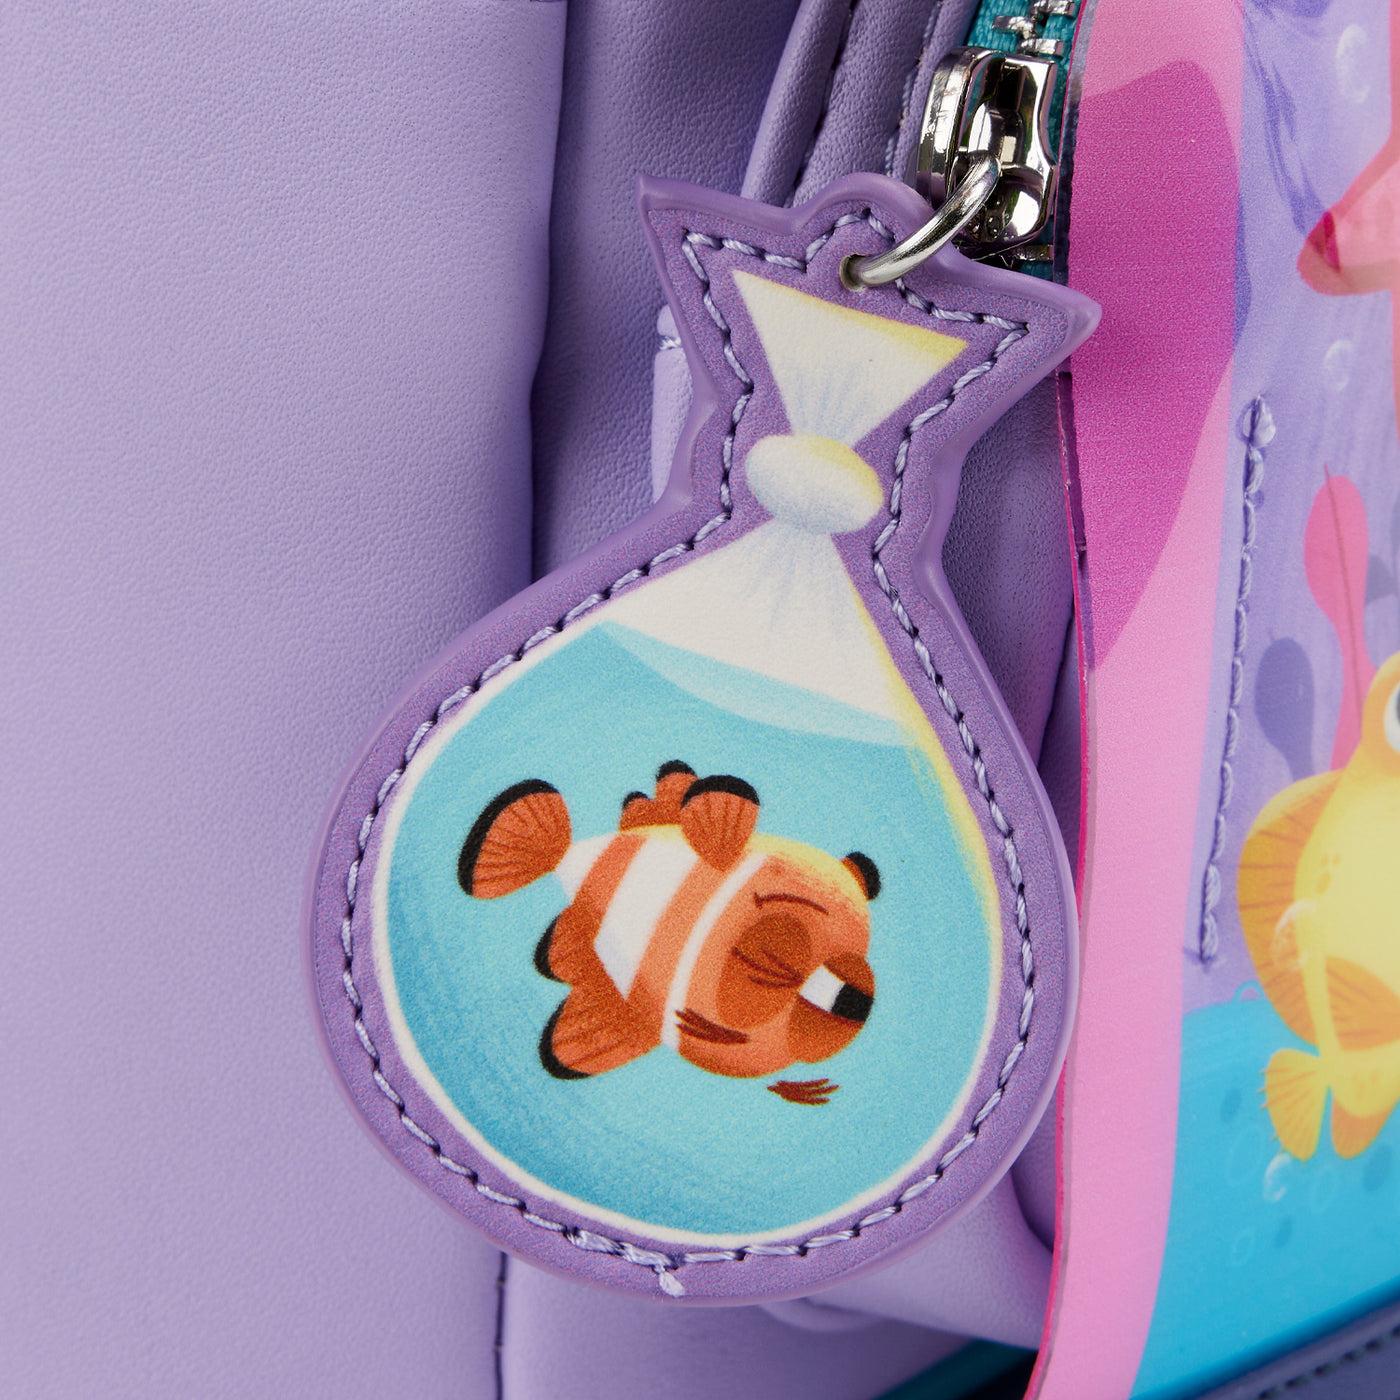 Disney Pixar Finding Nemo Darla Mini Backpack